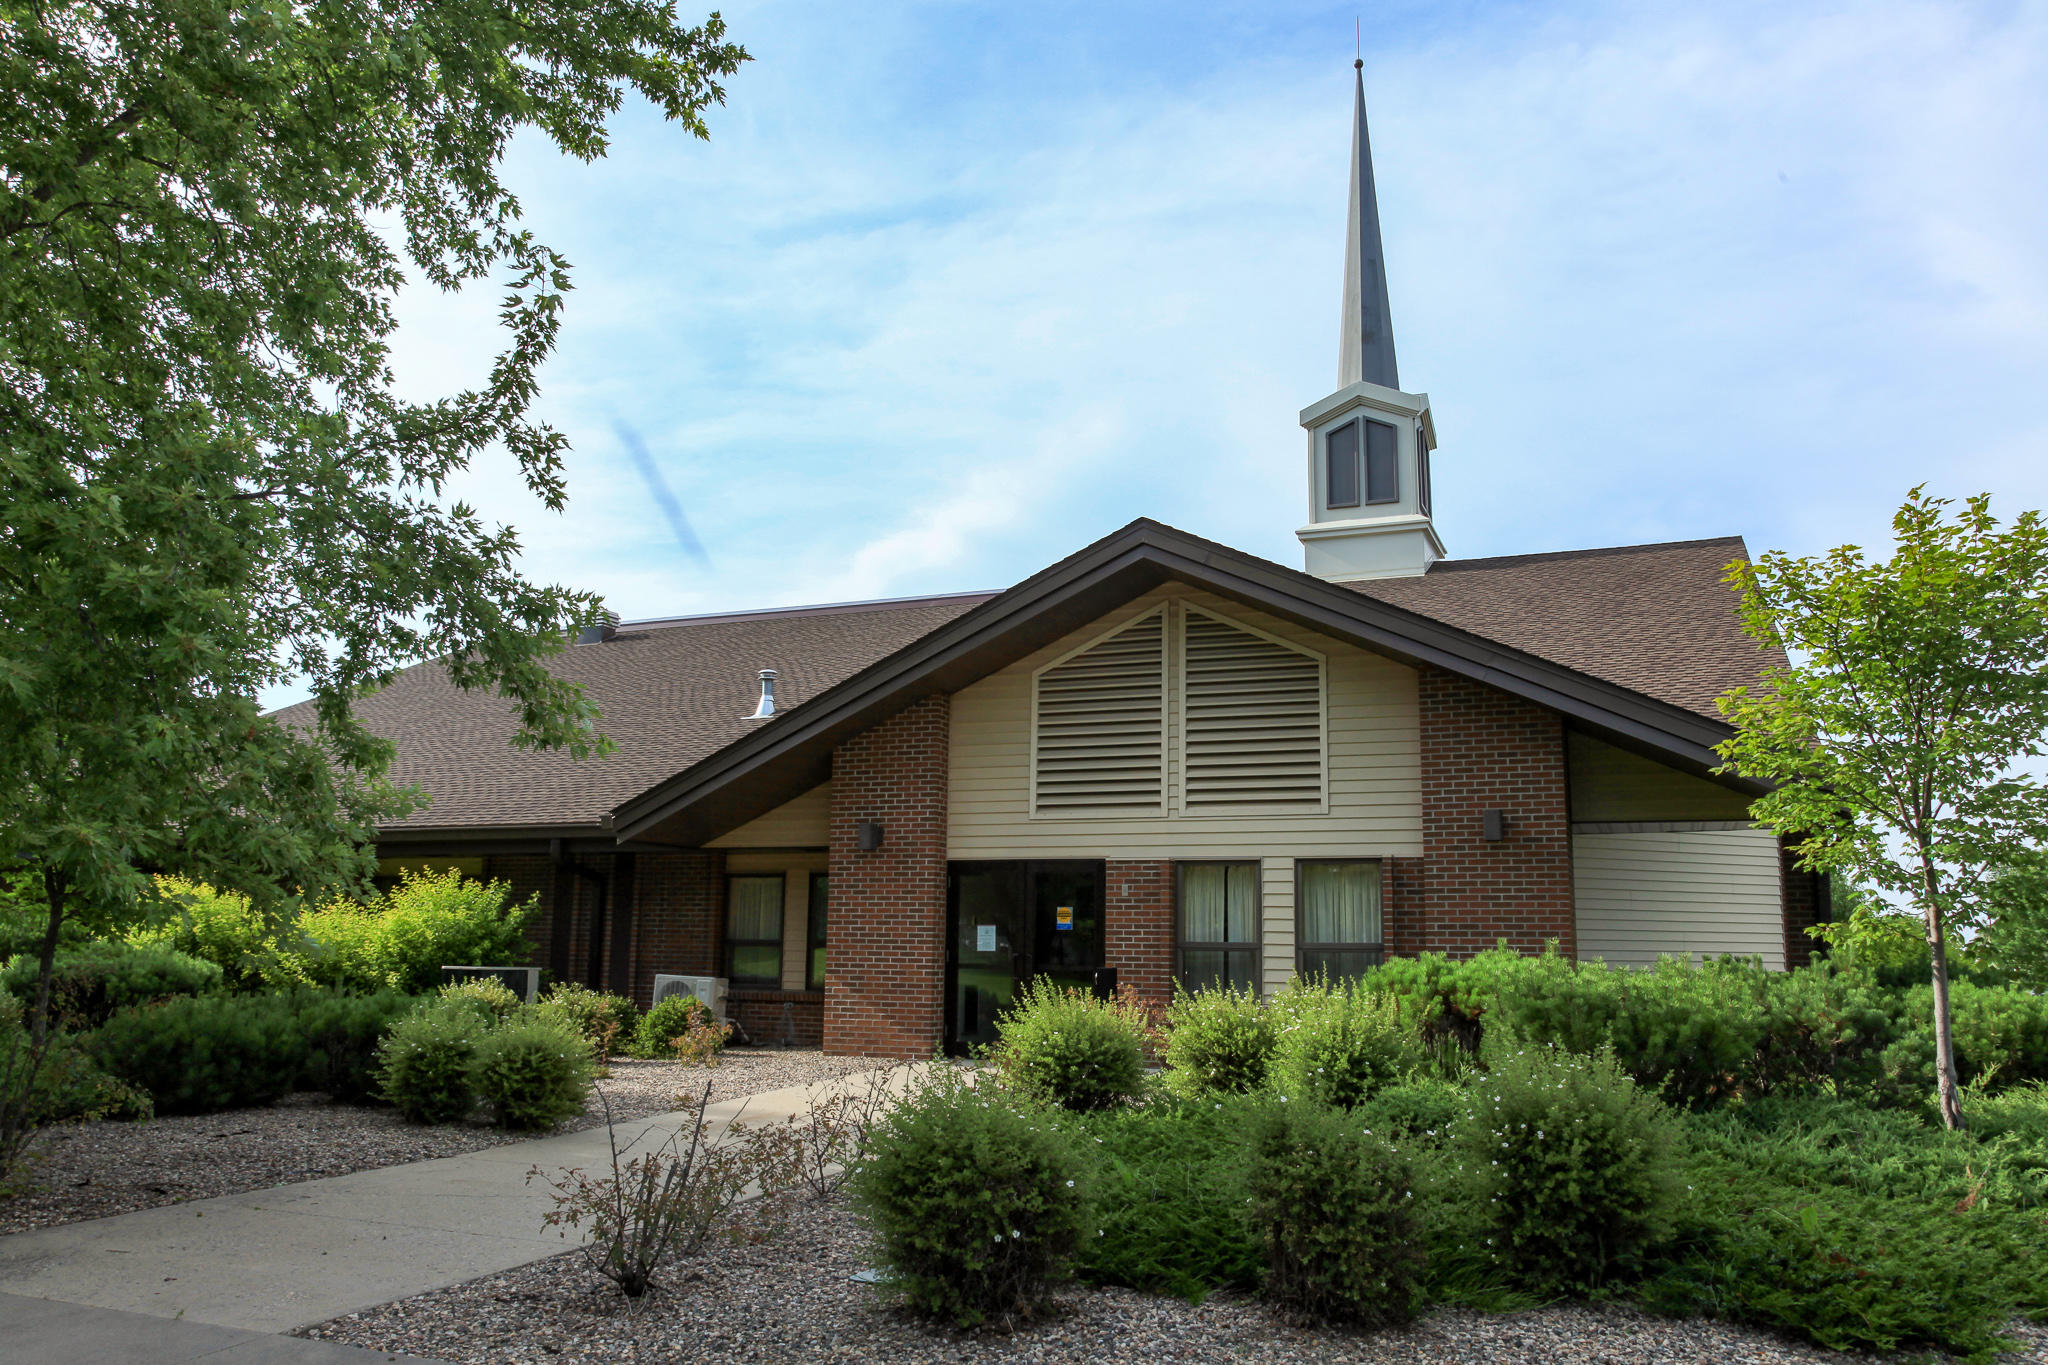 The Church of Jesus Christ of Latter-day Saints, Detroit Lakes, Minnesota 56501